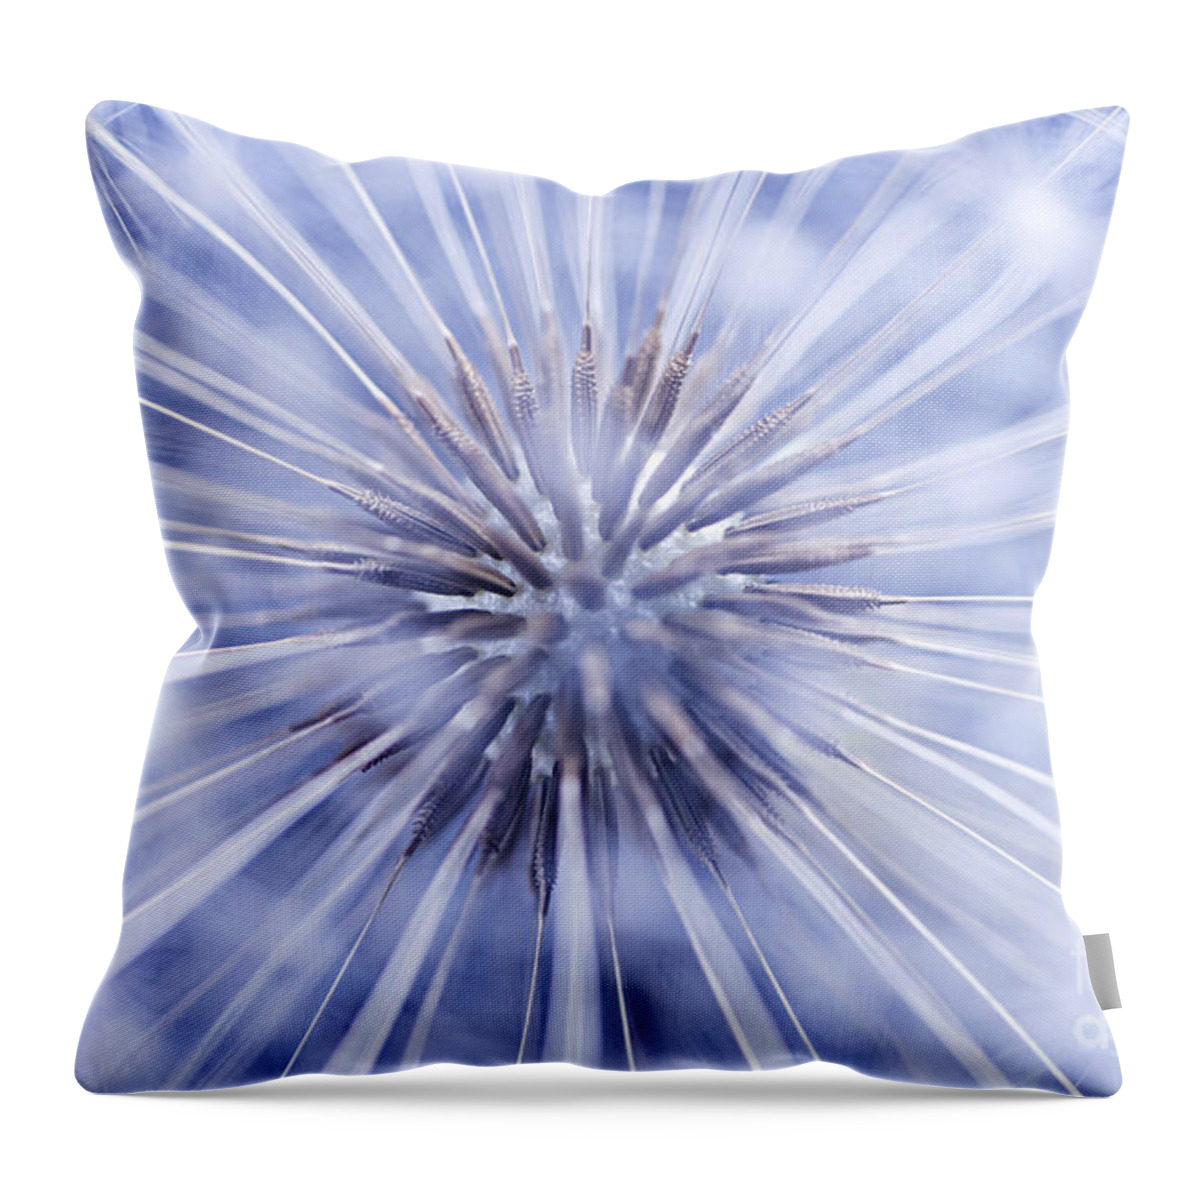 Dandelion Throw Pillow featuring the photograph Dandelion seeds 3 by Elena Elisseeva